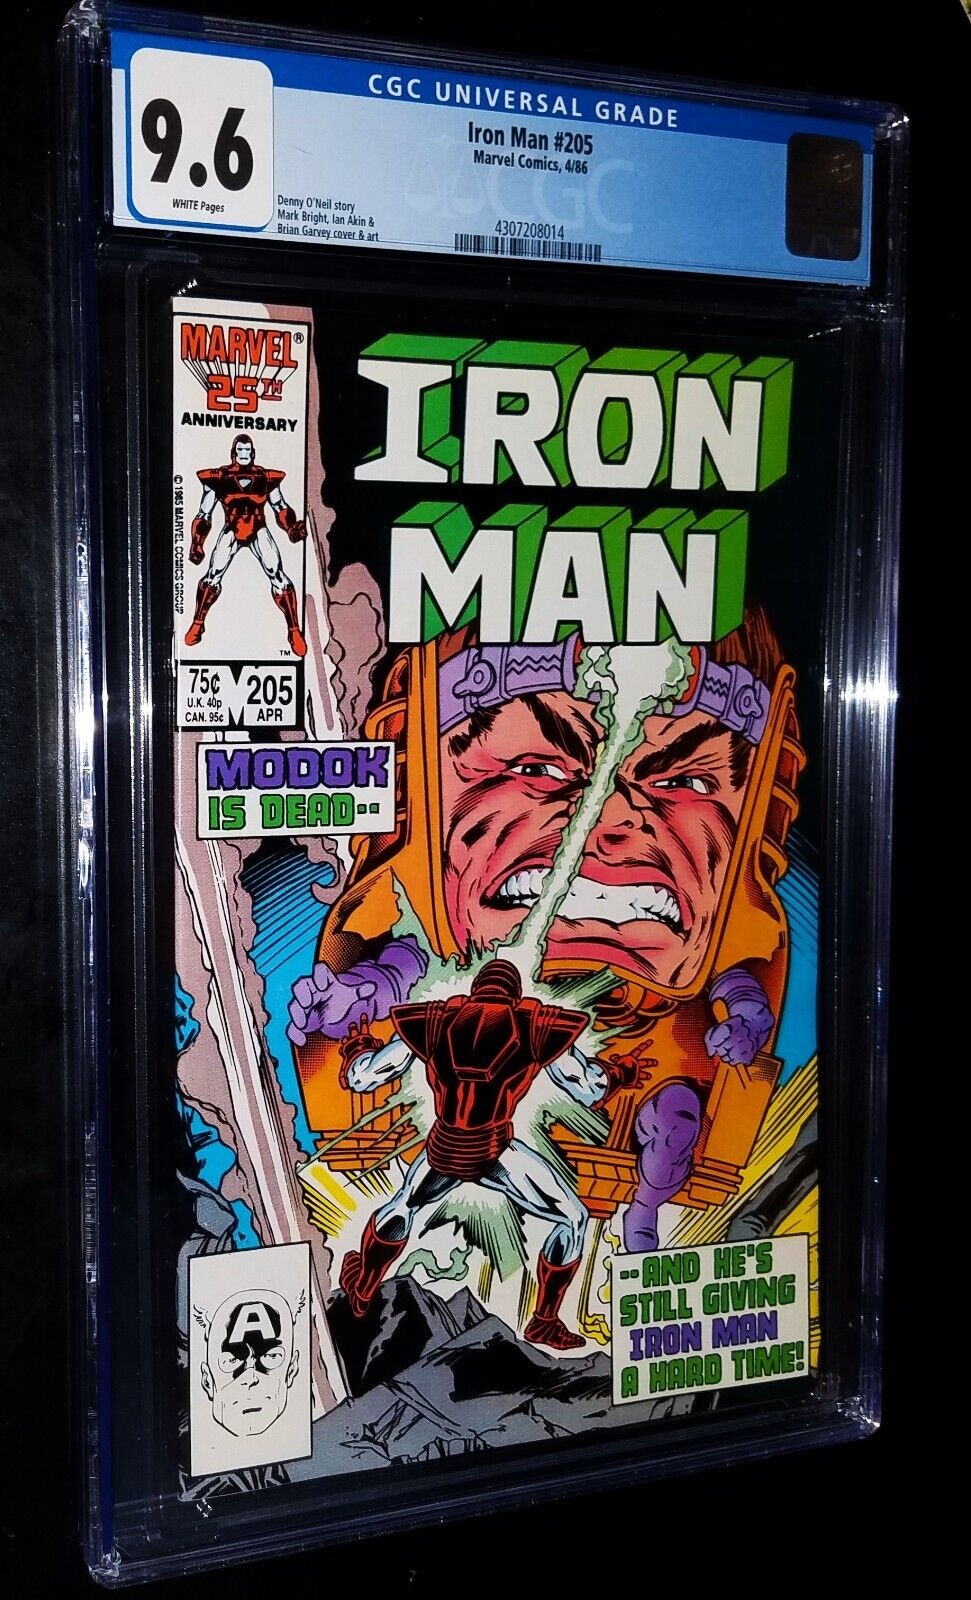 CGC IRON MAN #205 1986 Marvel Comics CGC 9.6 NM+ White Pages